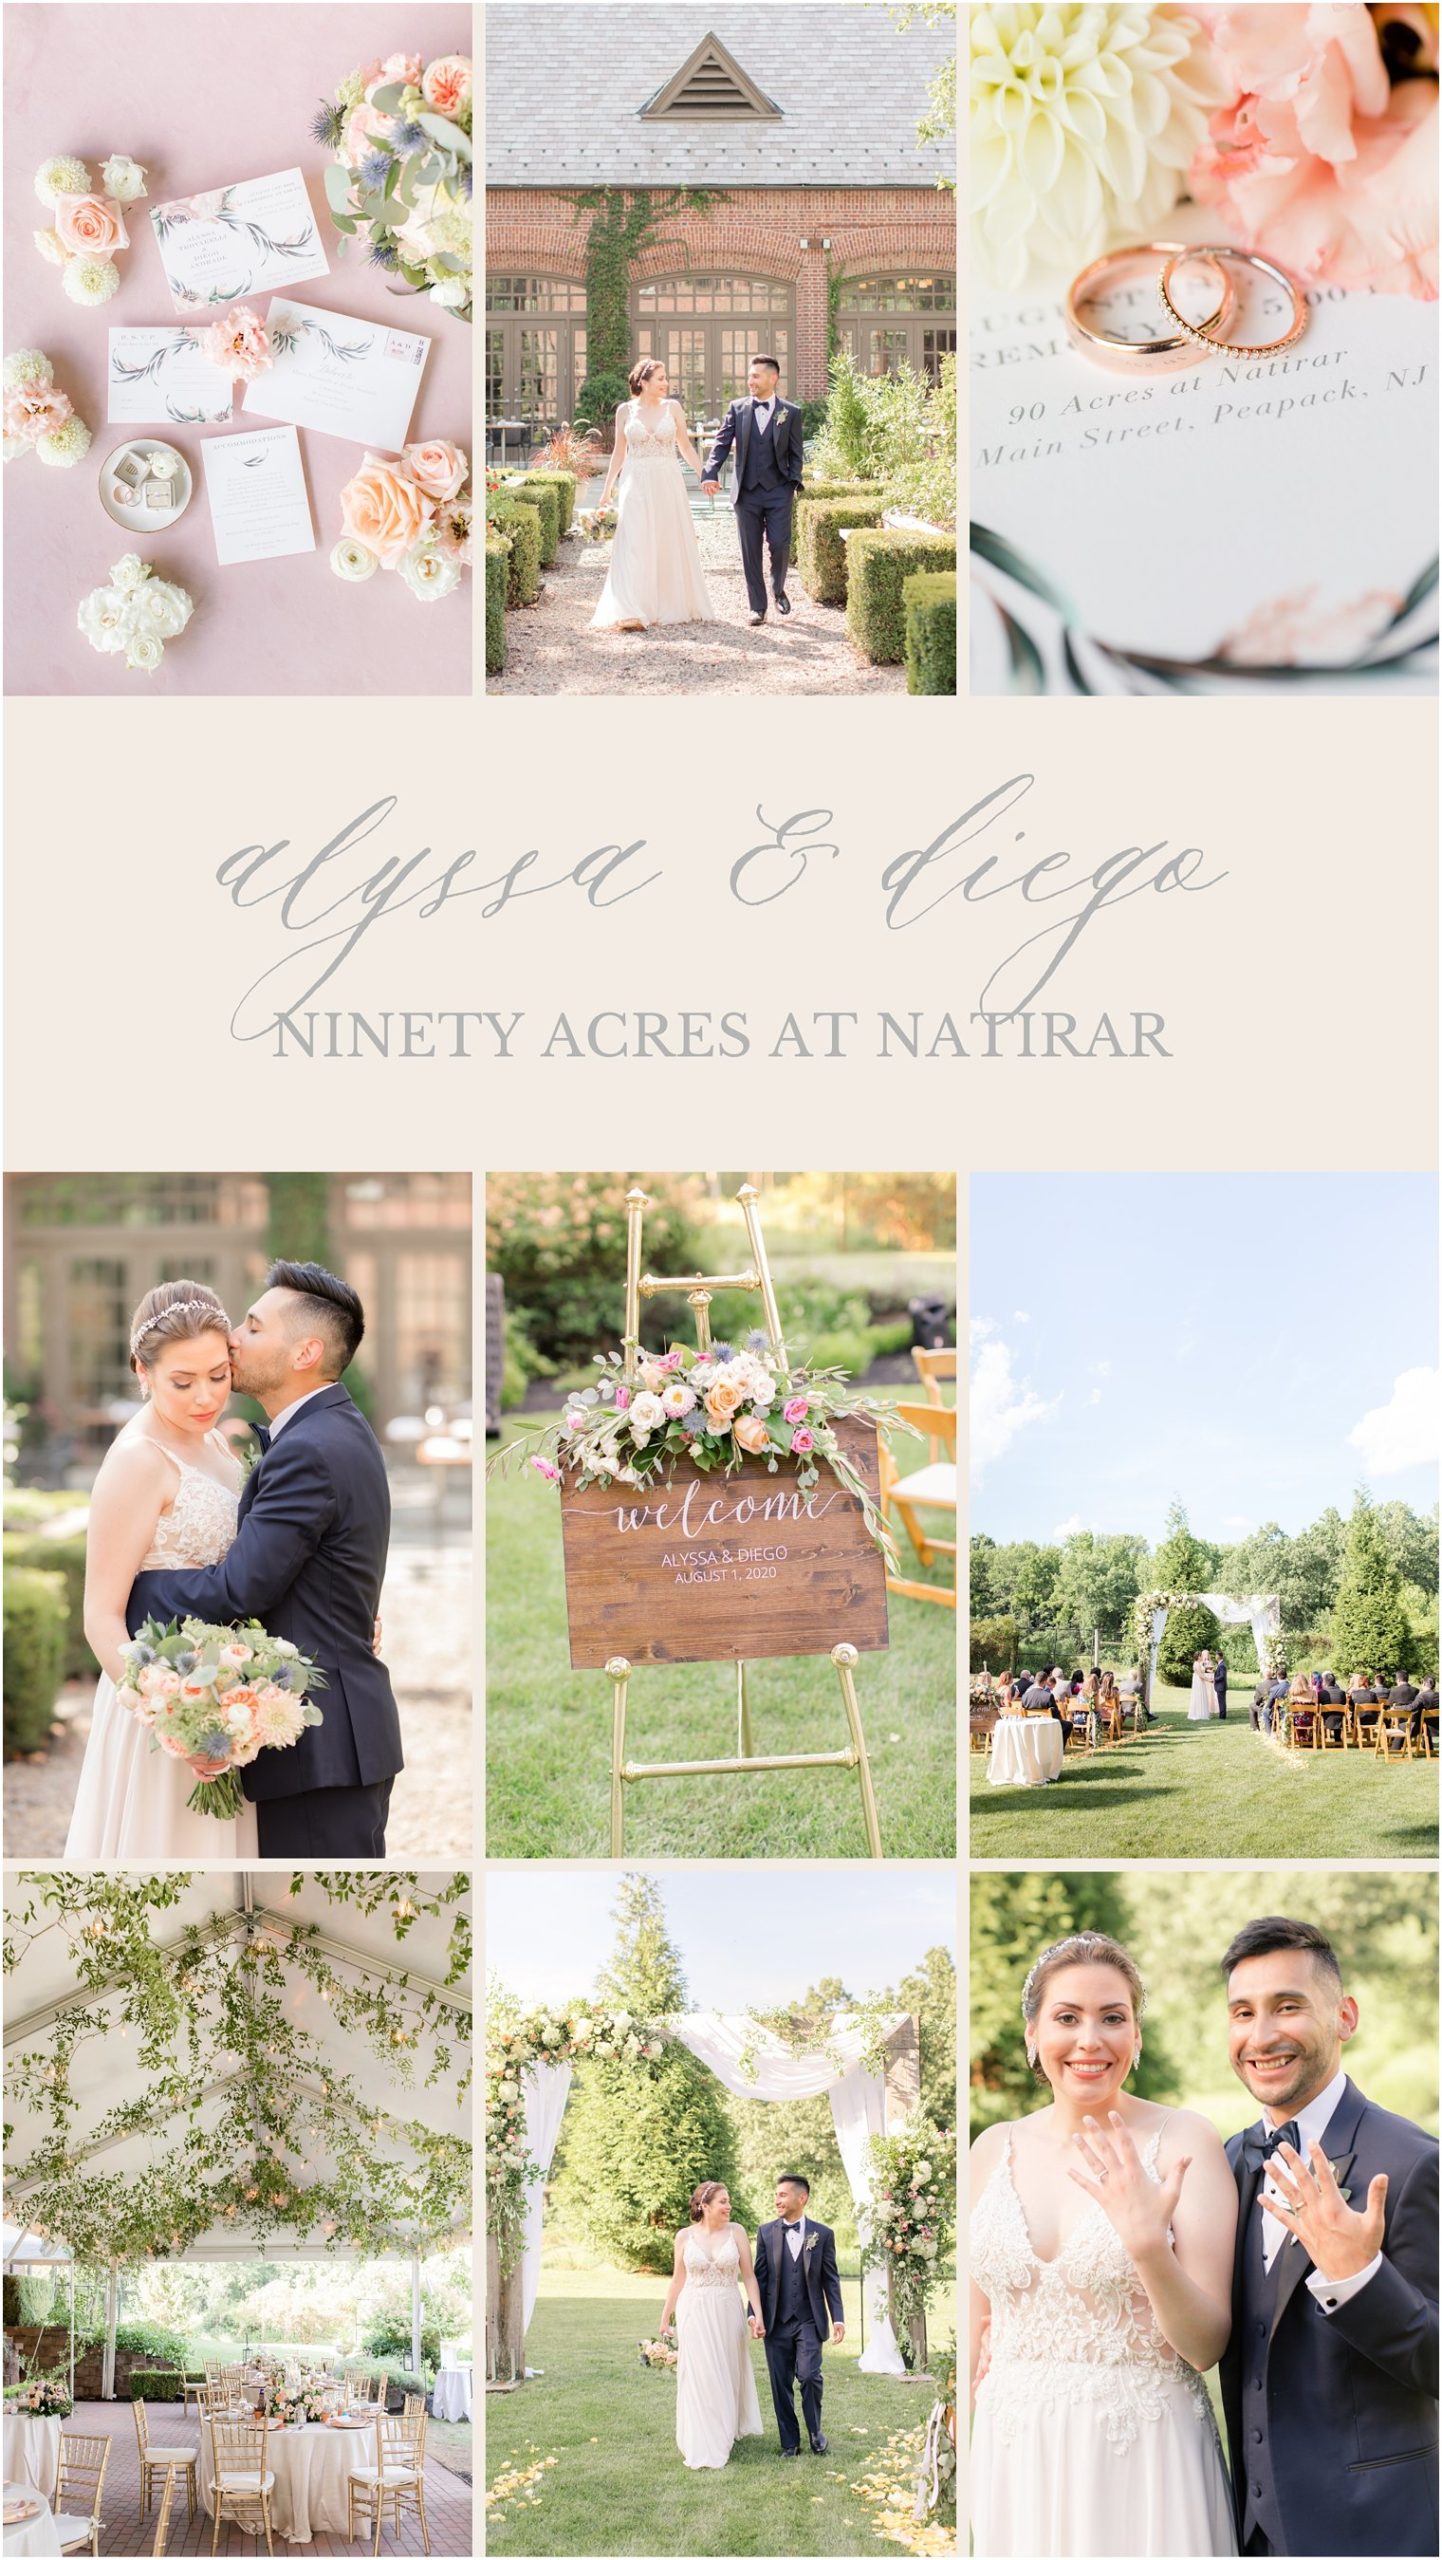 Summer wedding at Natirar Ninety Acres